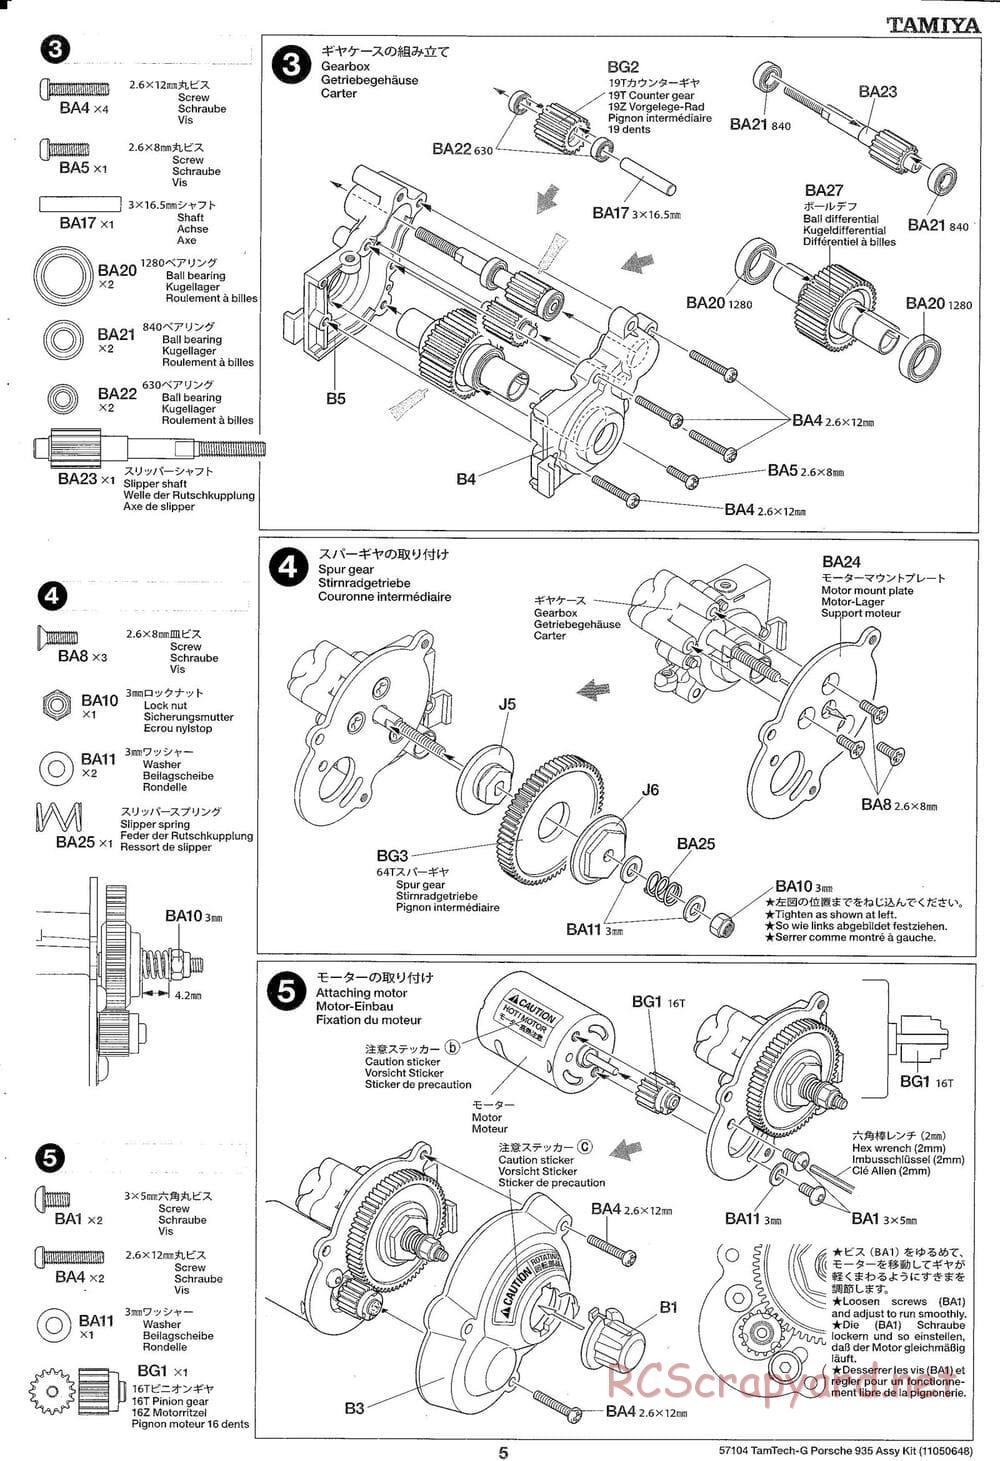 Tamiya - Porsche 935 Martini - GT-01 Chassis - Manual - Page 5